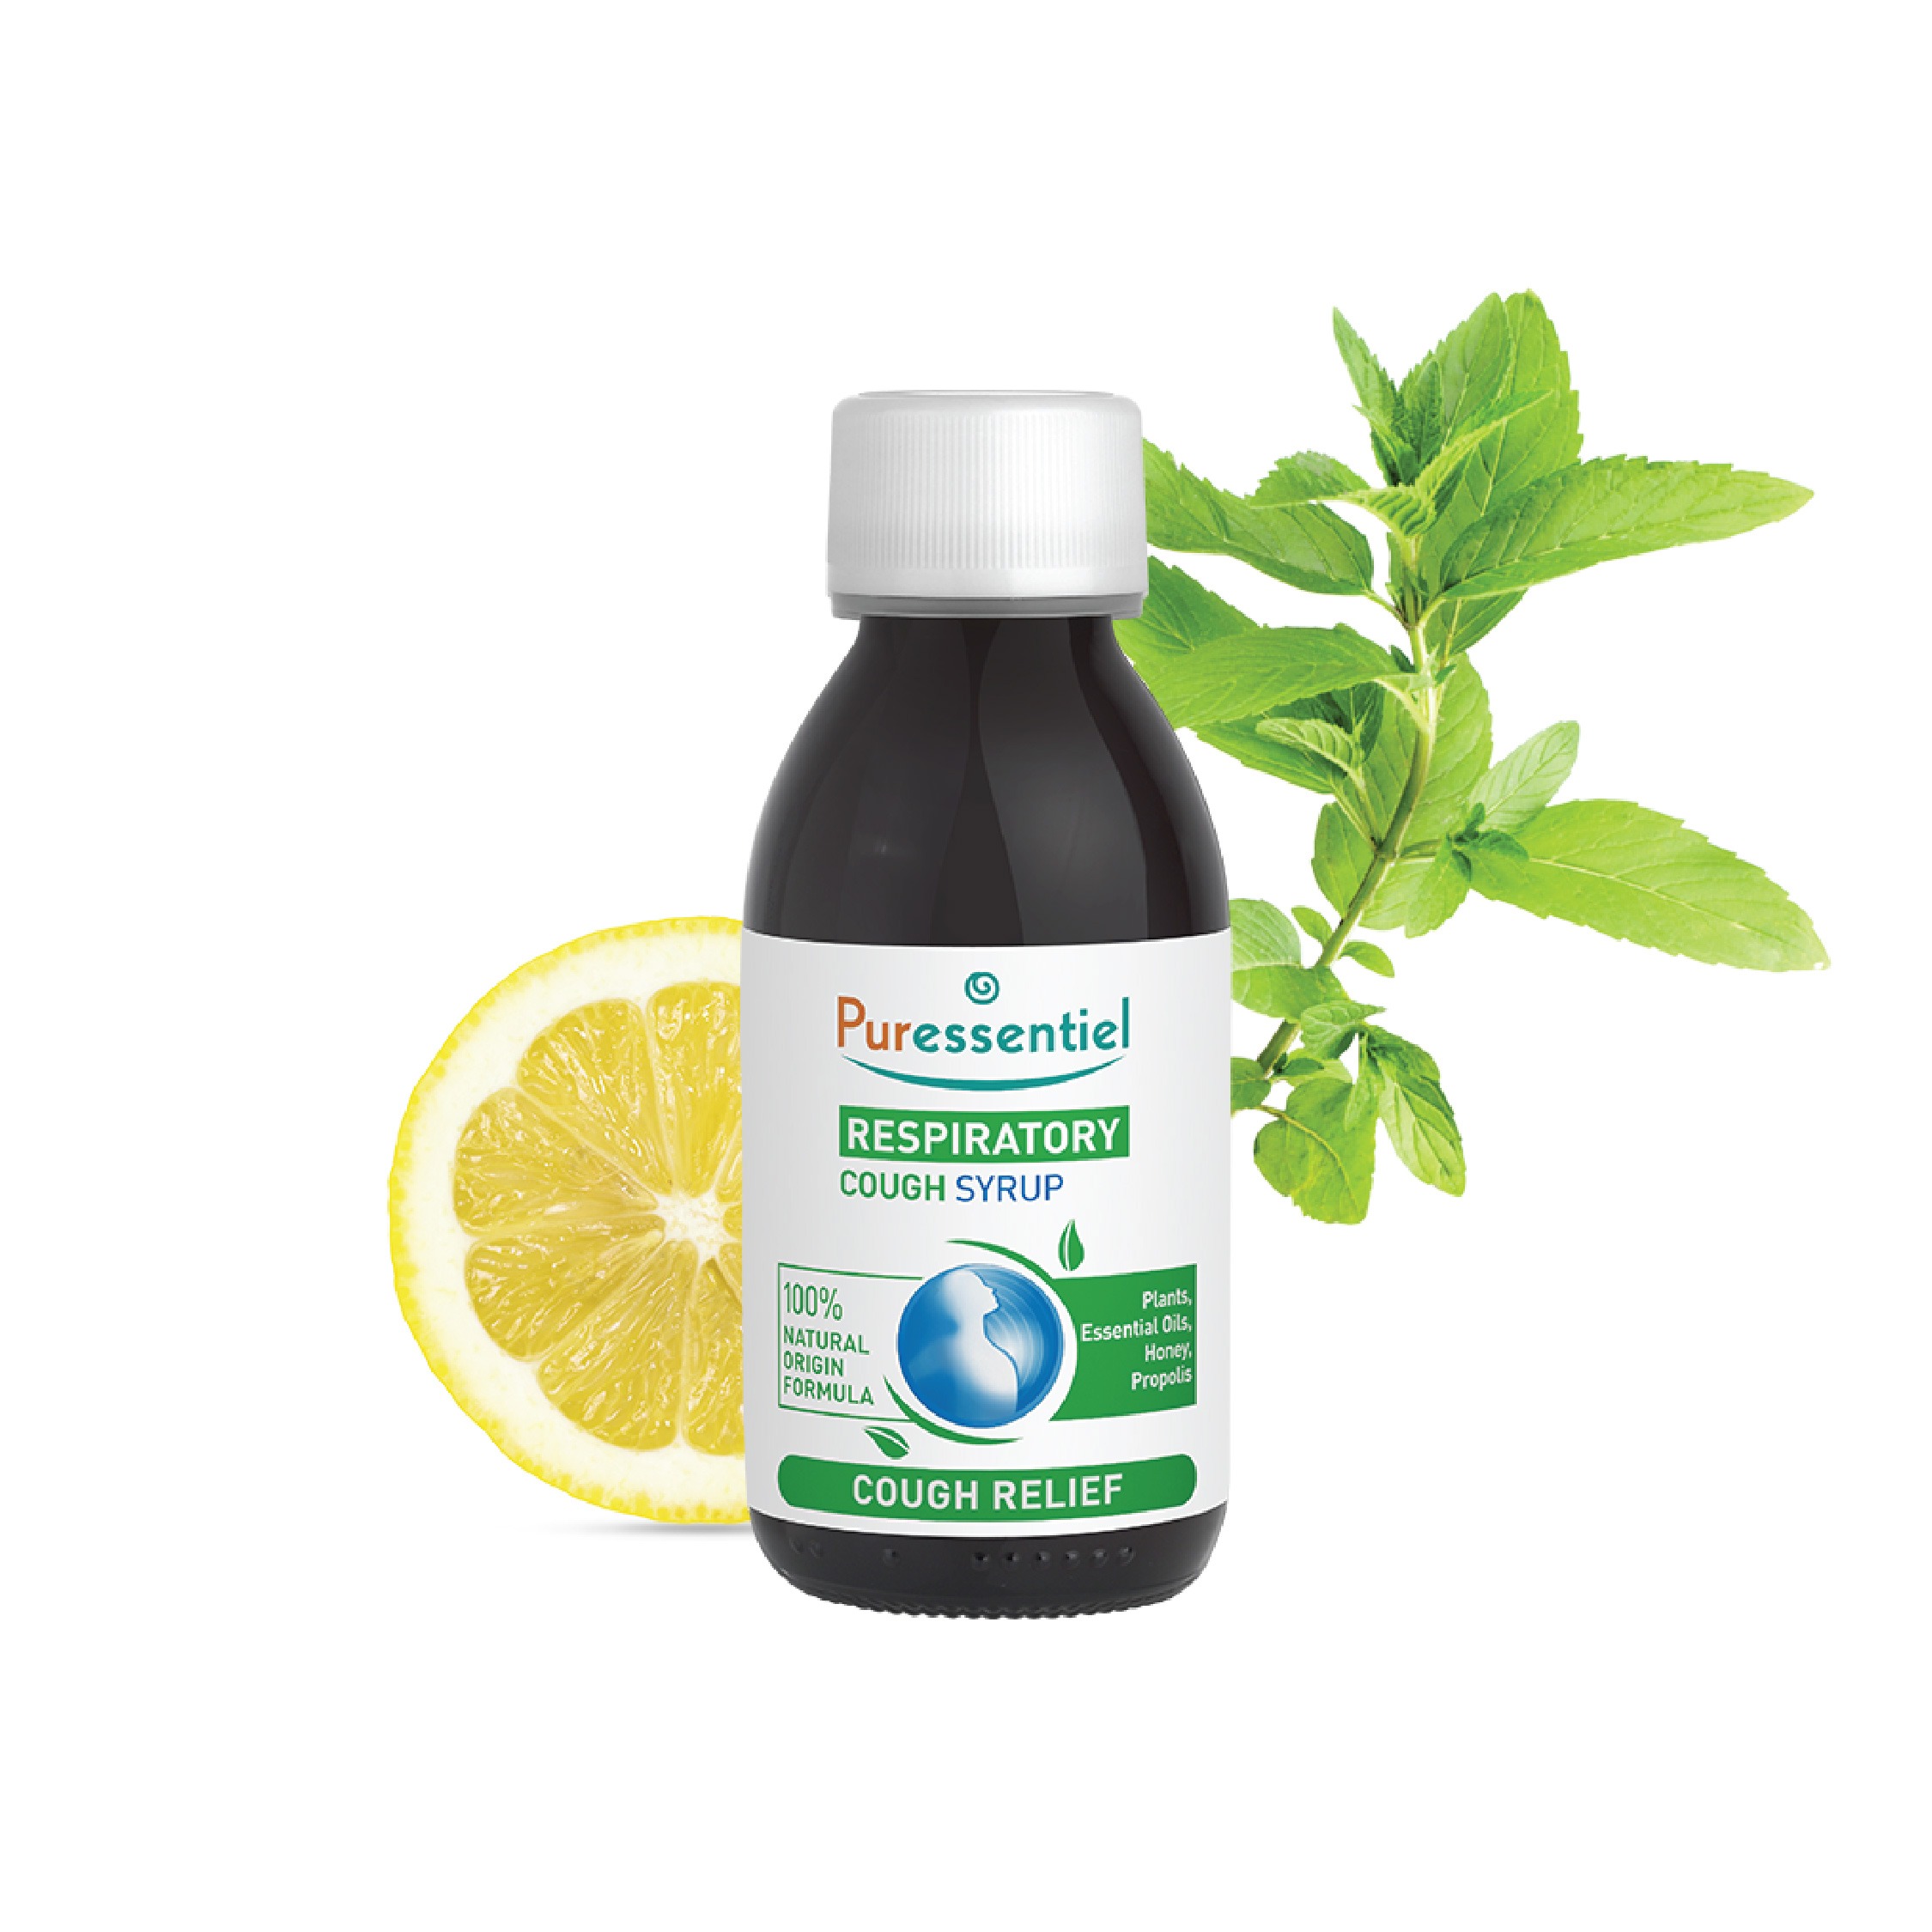 PURESSENTIEL huile essentielle Encens 5 ml bio - Pharma-Médicaments.com